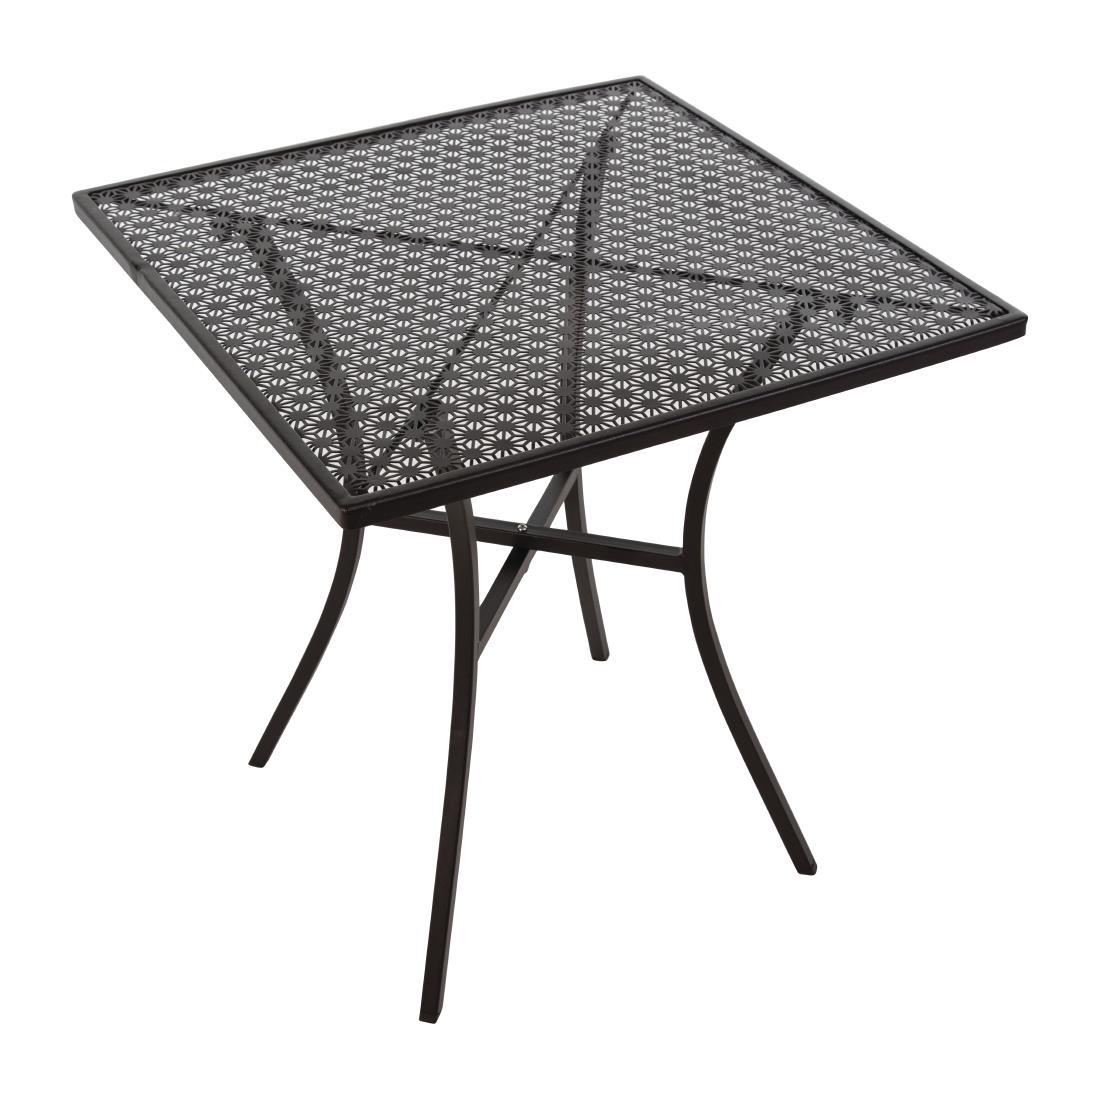 Bolero Black Steel Patterned Square Bistro Table 700mm - GG706  - 1